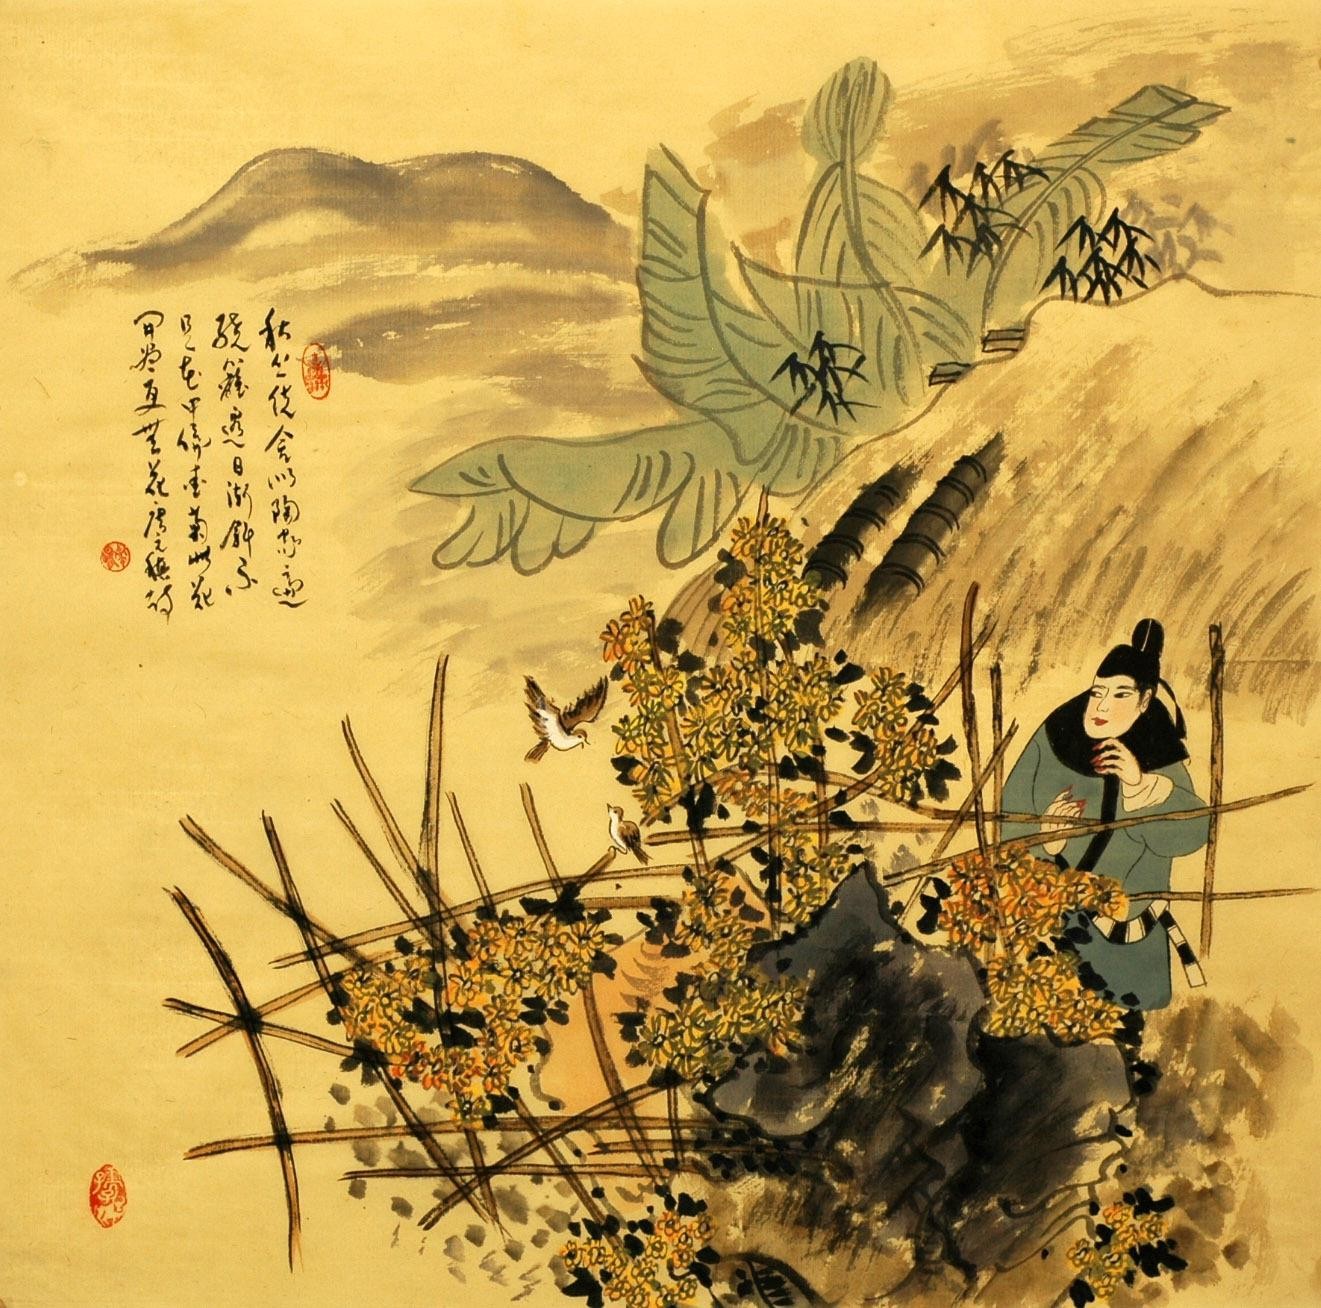 Chinese Cursive Scripts Painting - CNAG007239